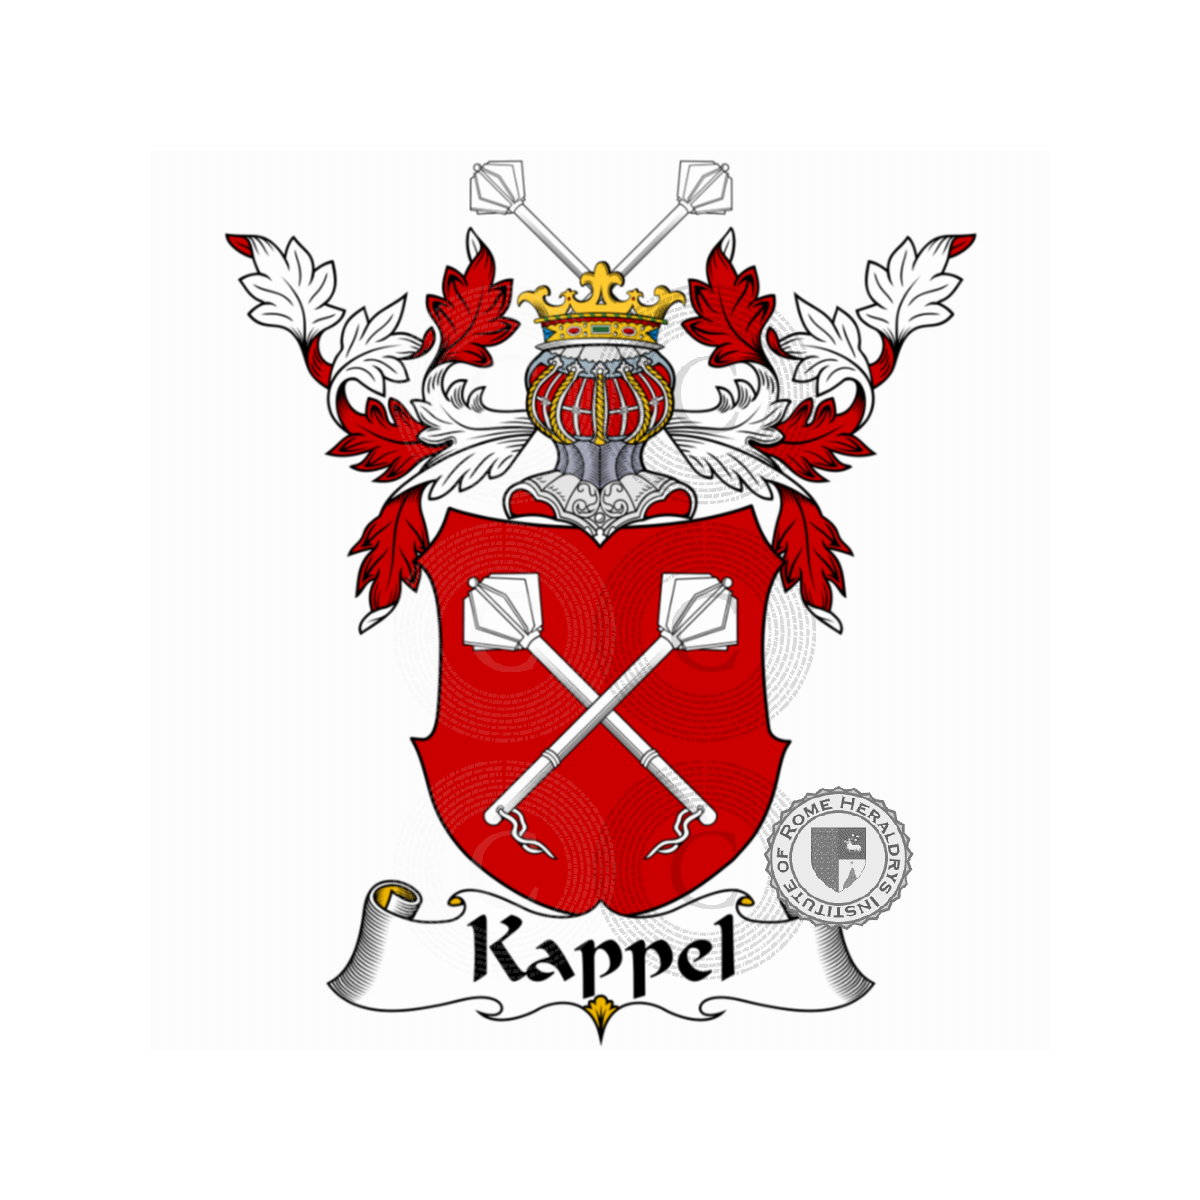 Brasão da famíliaKappel, Cappel